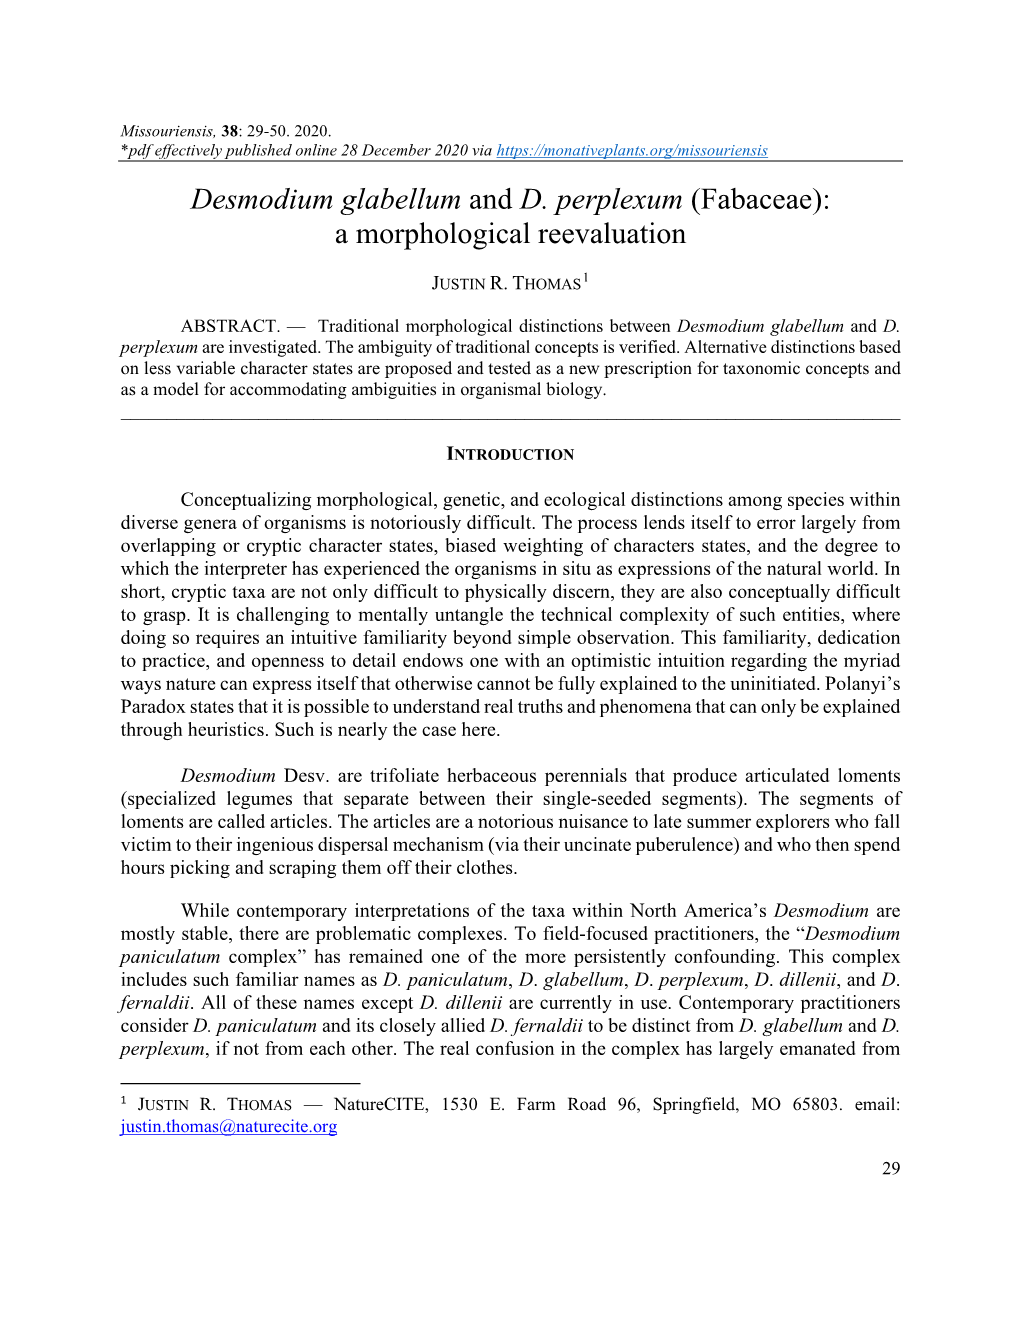 Desmodium Glabellum and D. Perplexum (Fabaceae): a Morphological Reevaluation